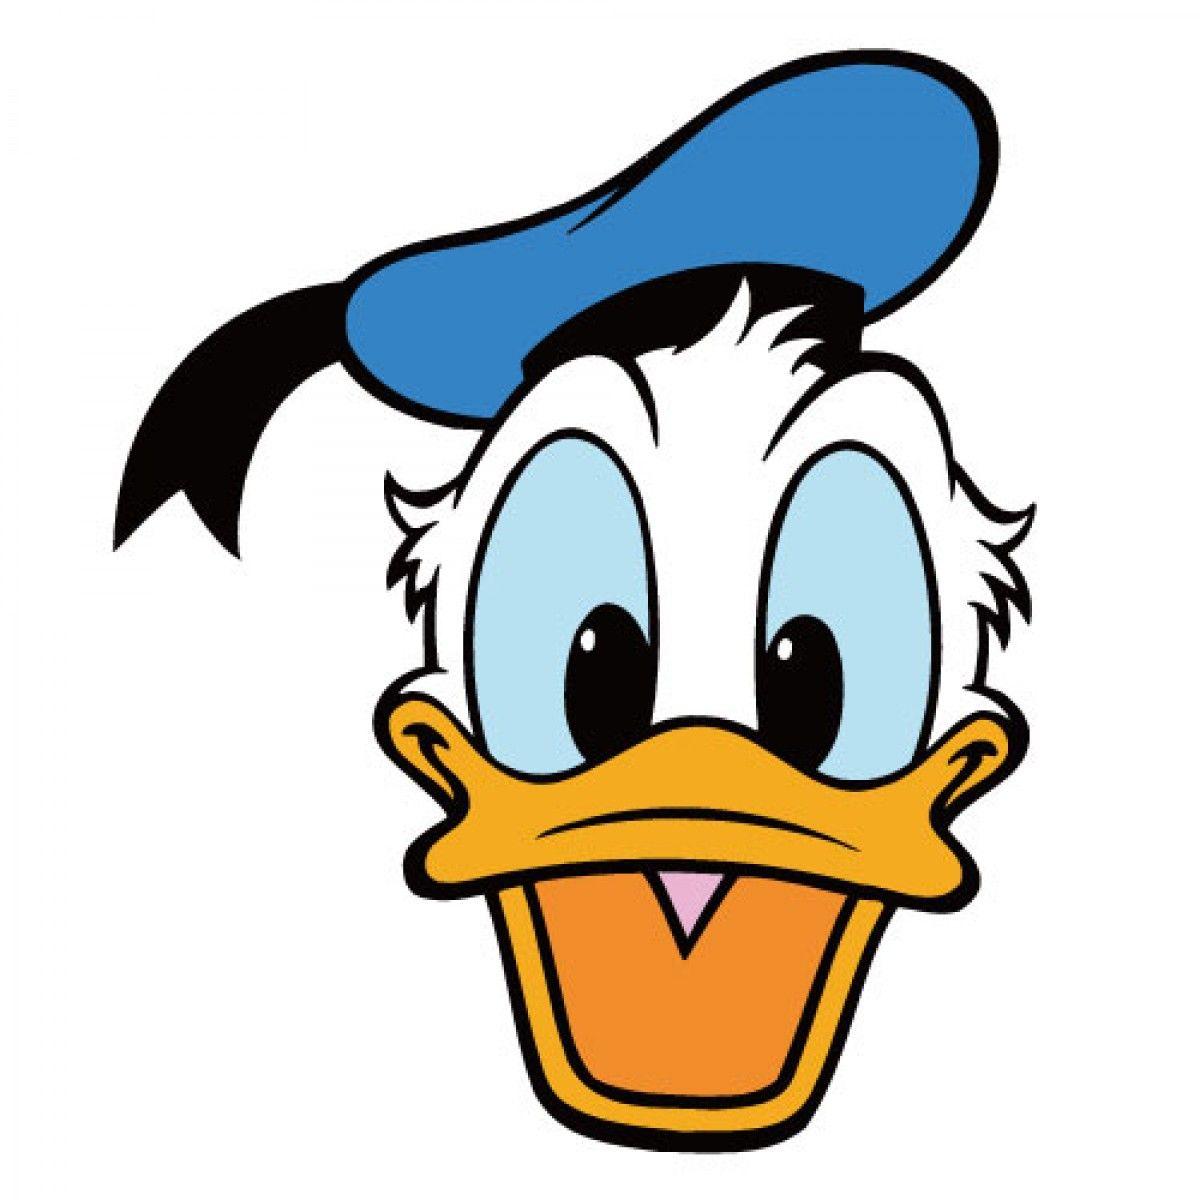 Donald Duck Logo - Donald duck Logos